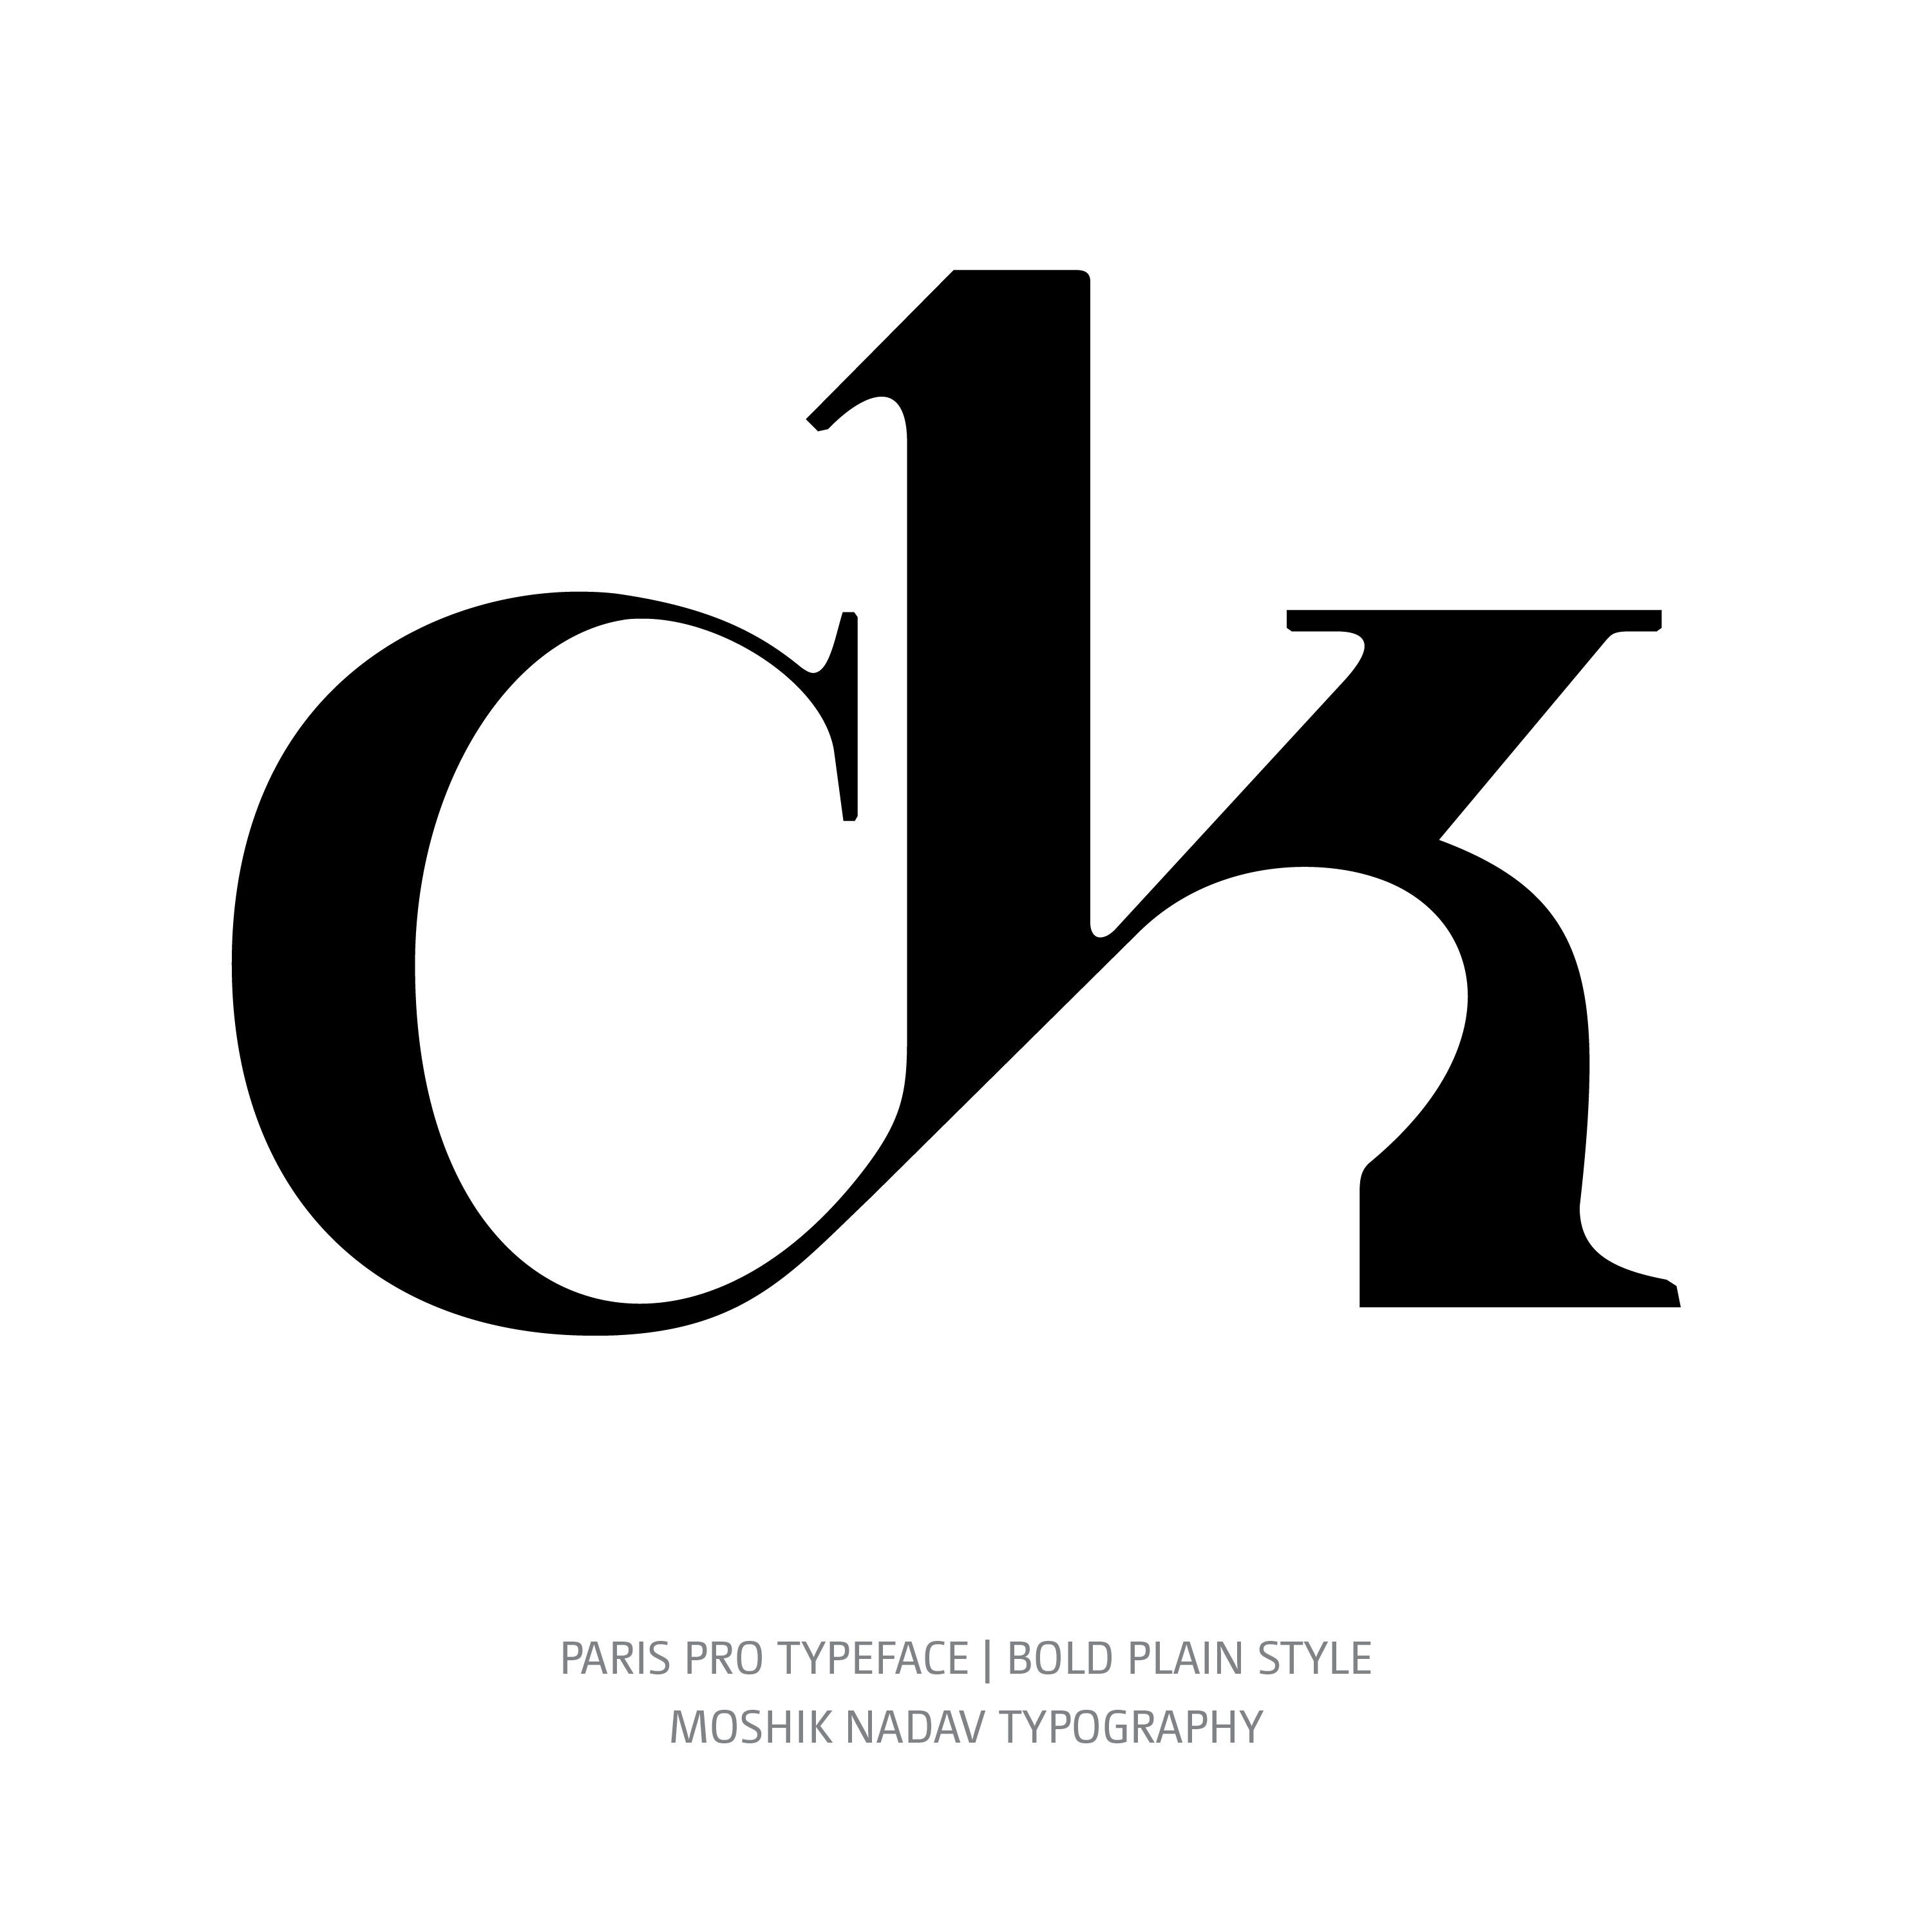 Paris Pro Typeface Bold or alternate ligature